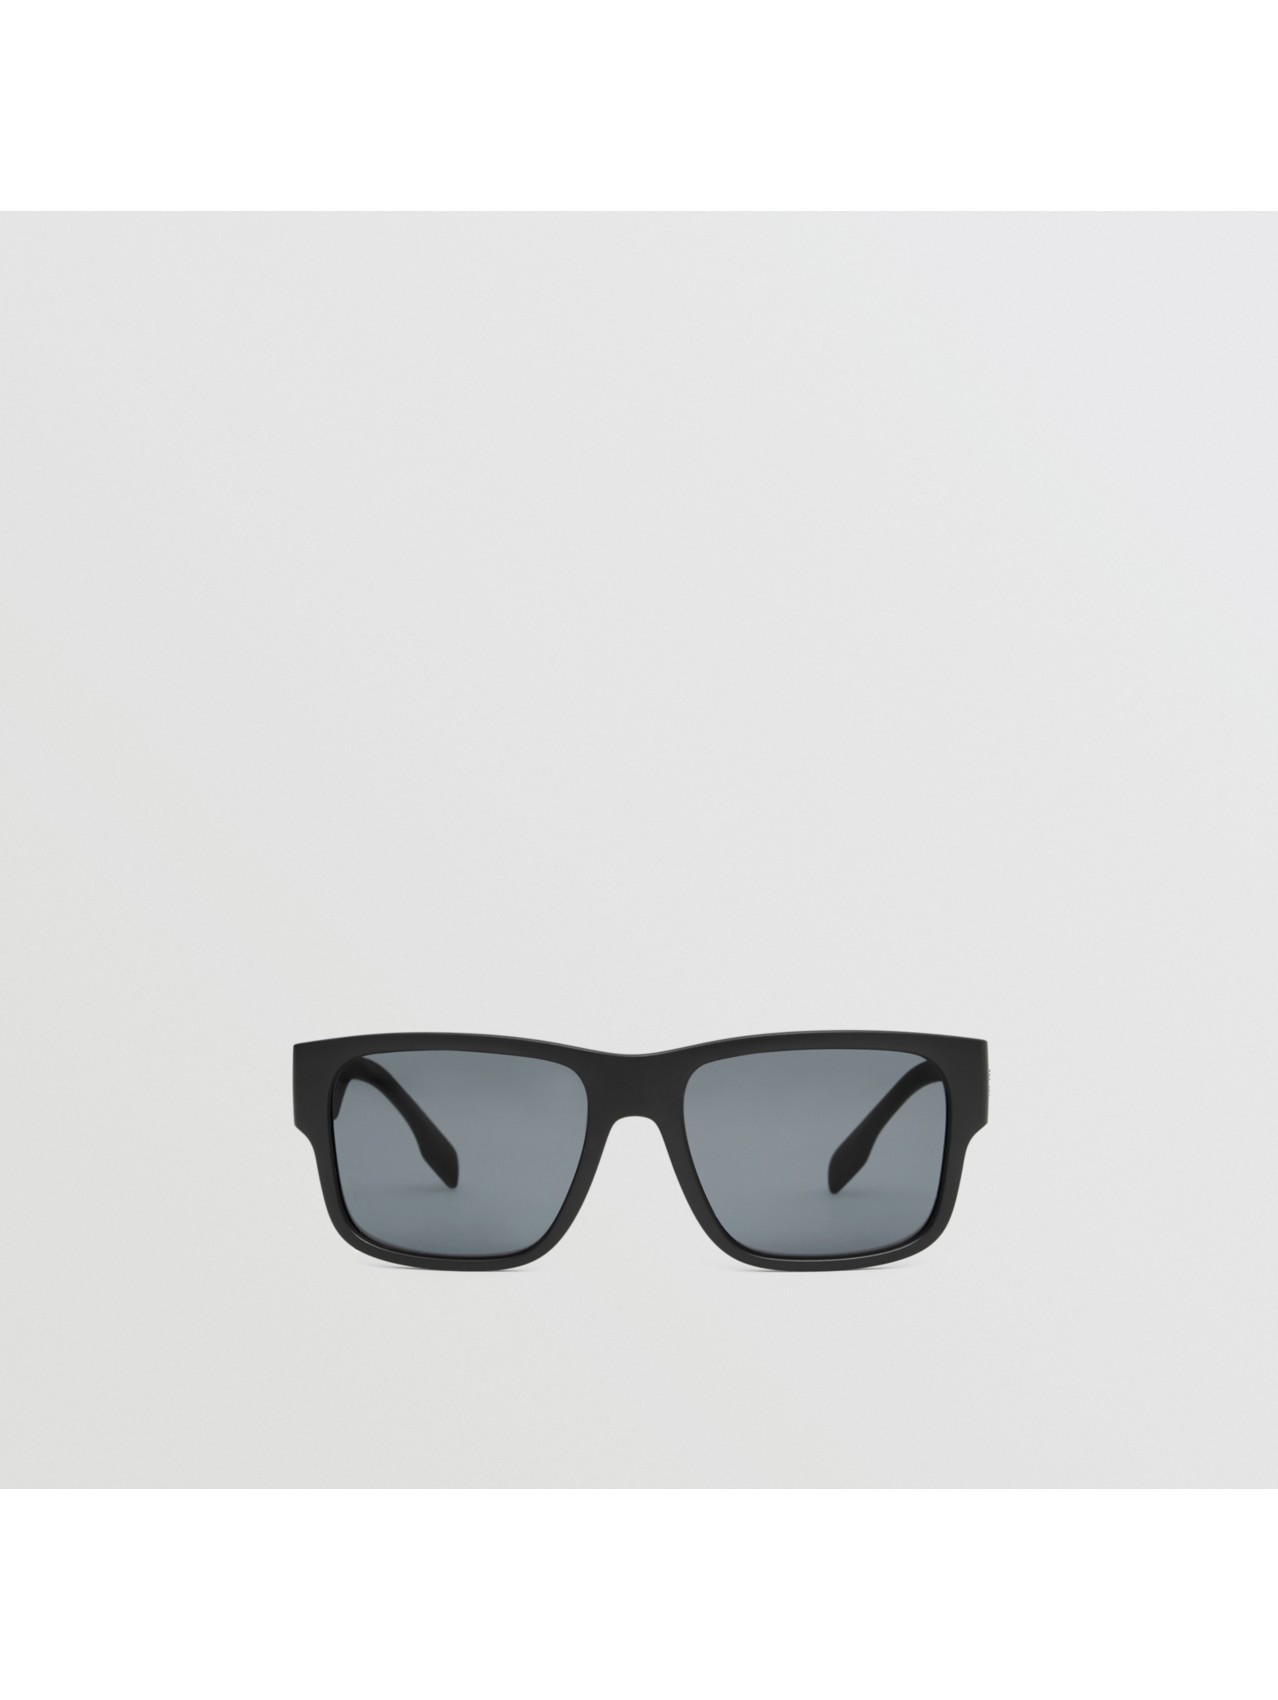 Men's Designer Eyewear | Opticals & Sunglasses | Burberry® Official